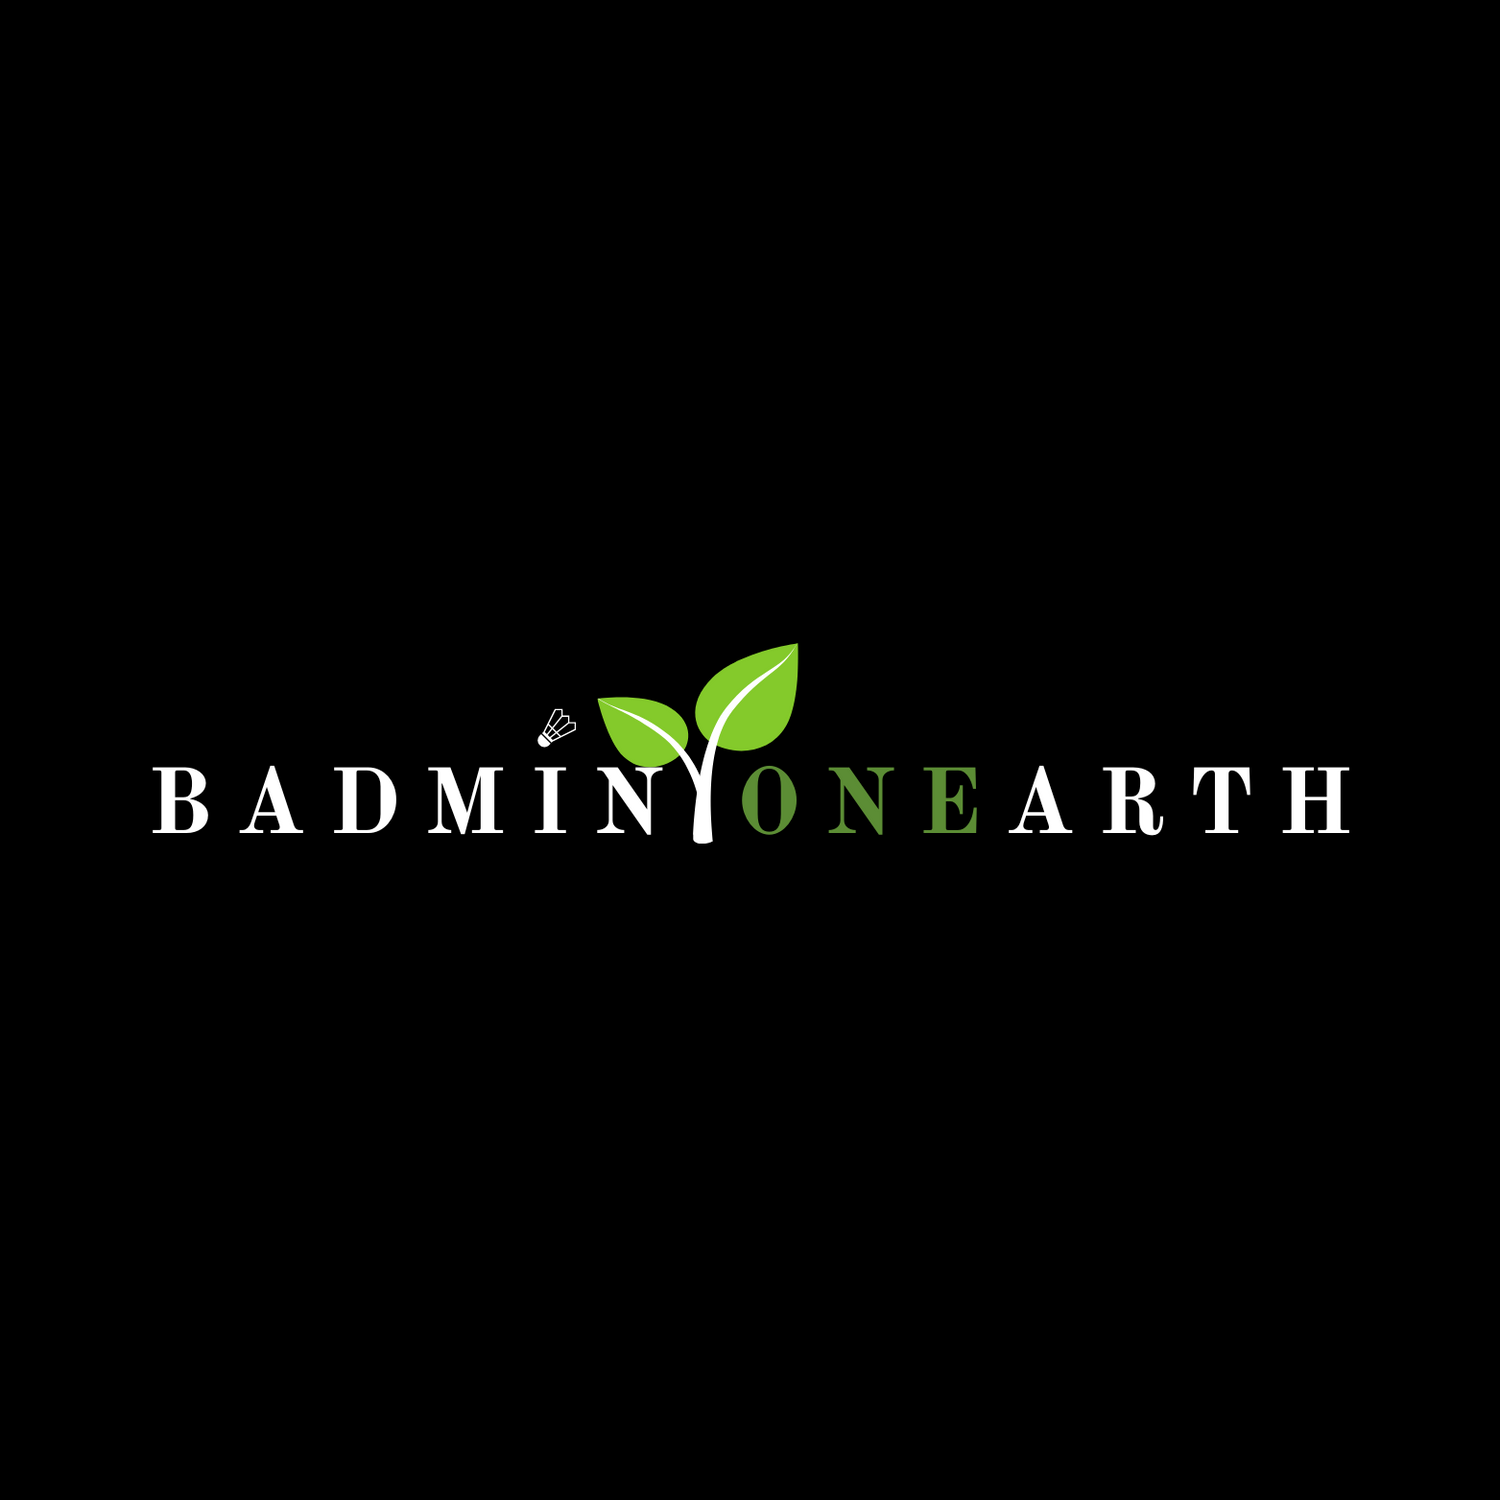 BadmintONEarth Logo